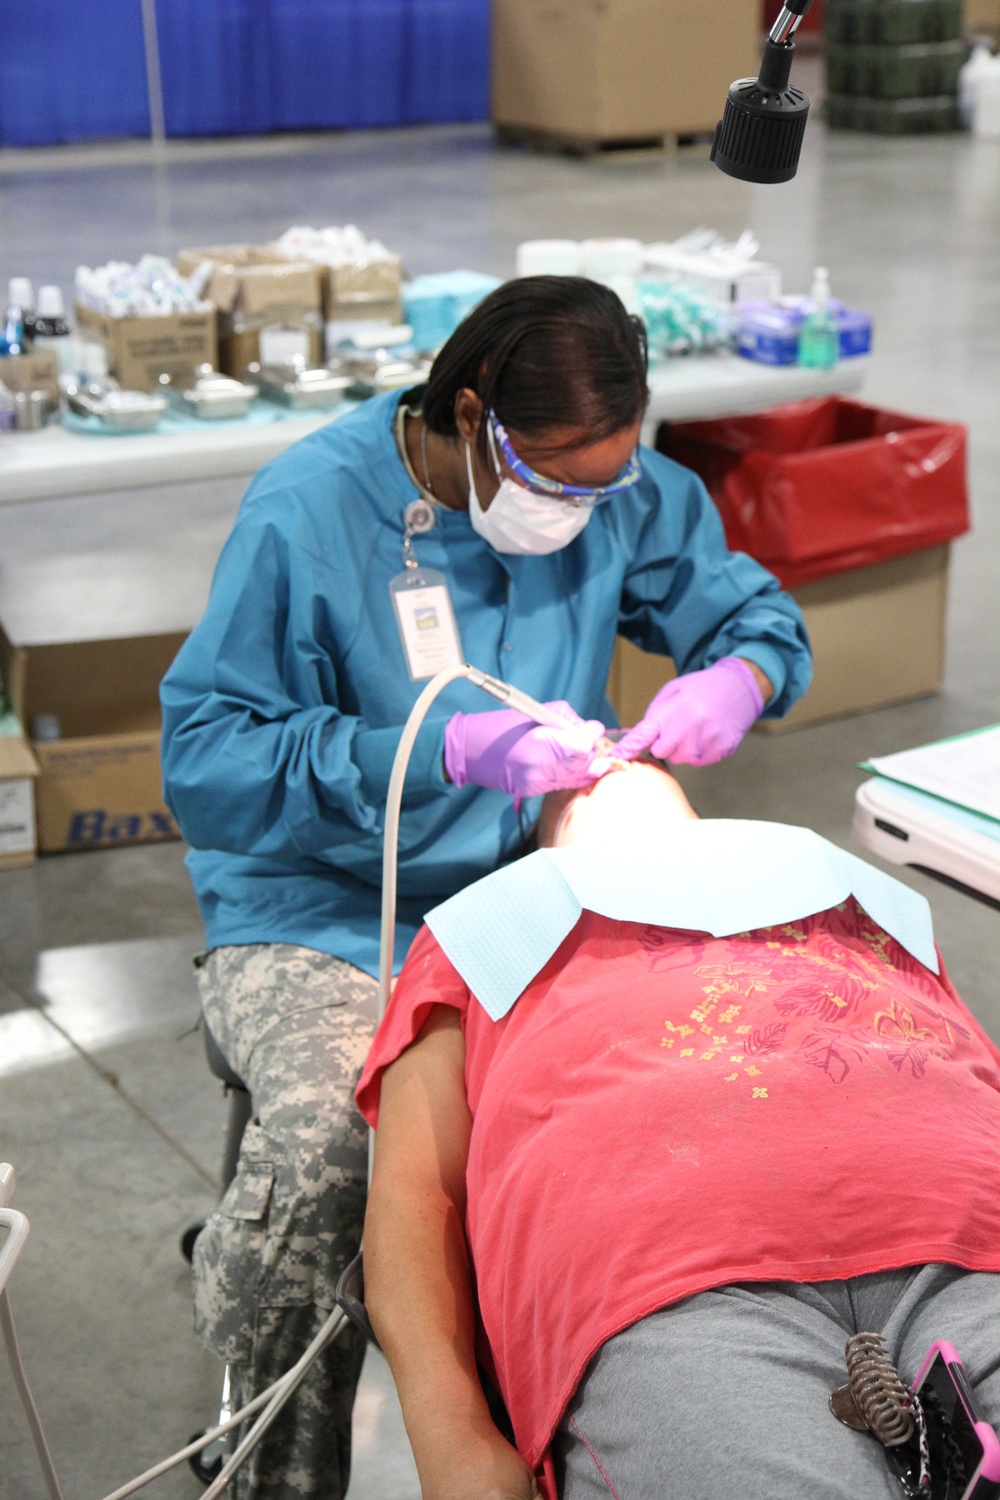 Dental hygienist provides services for community member